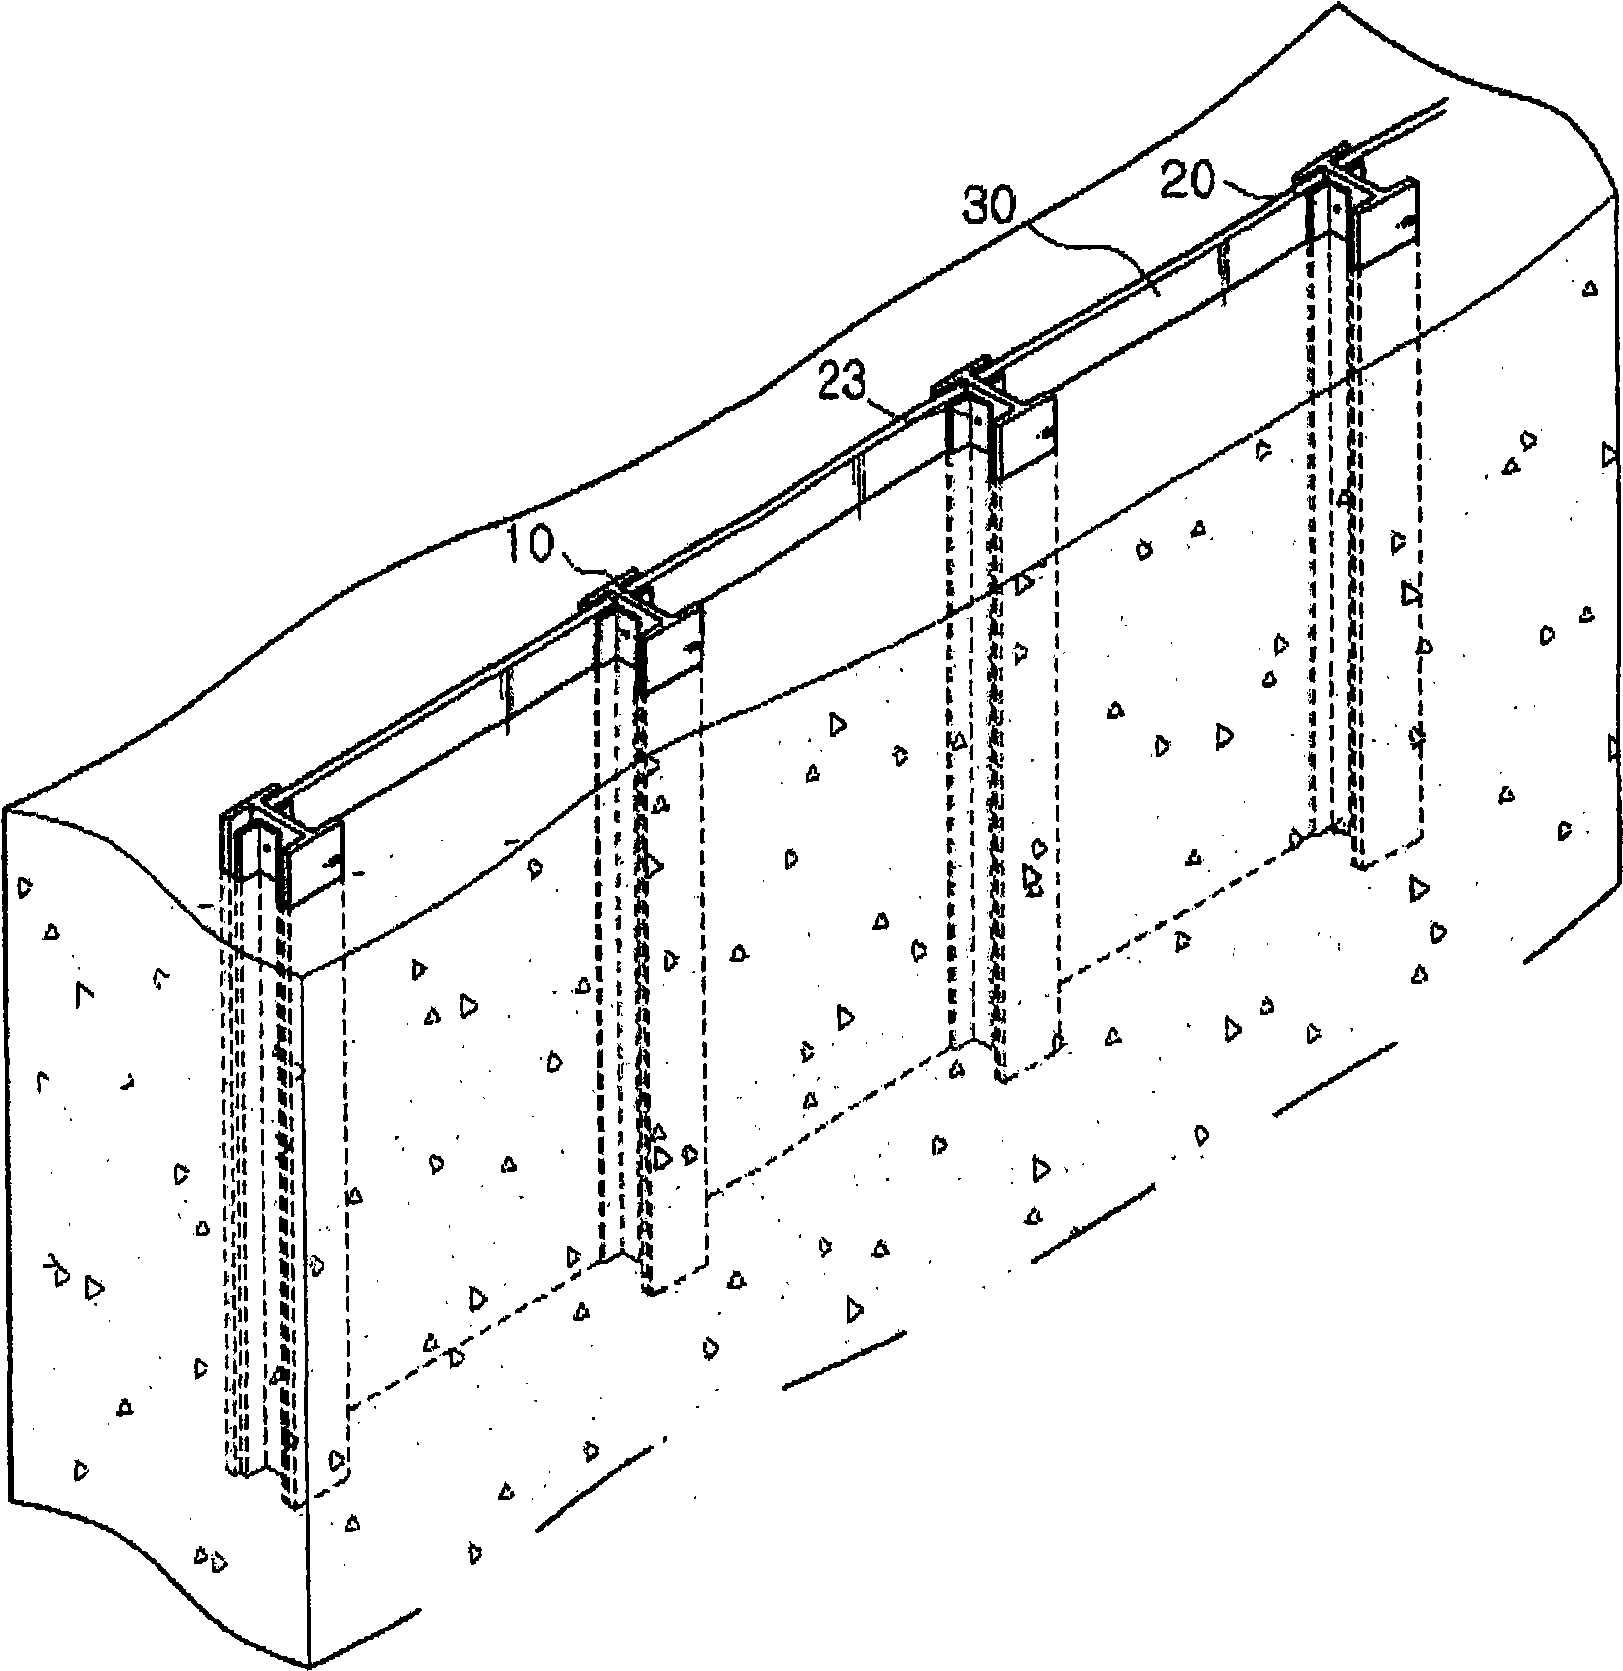 Soil guard structure and establishment method